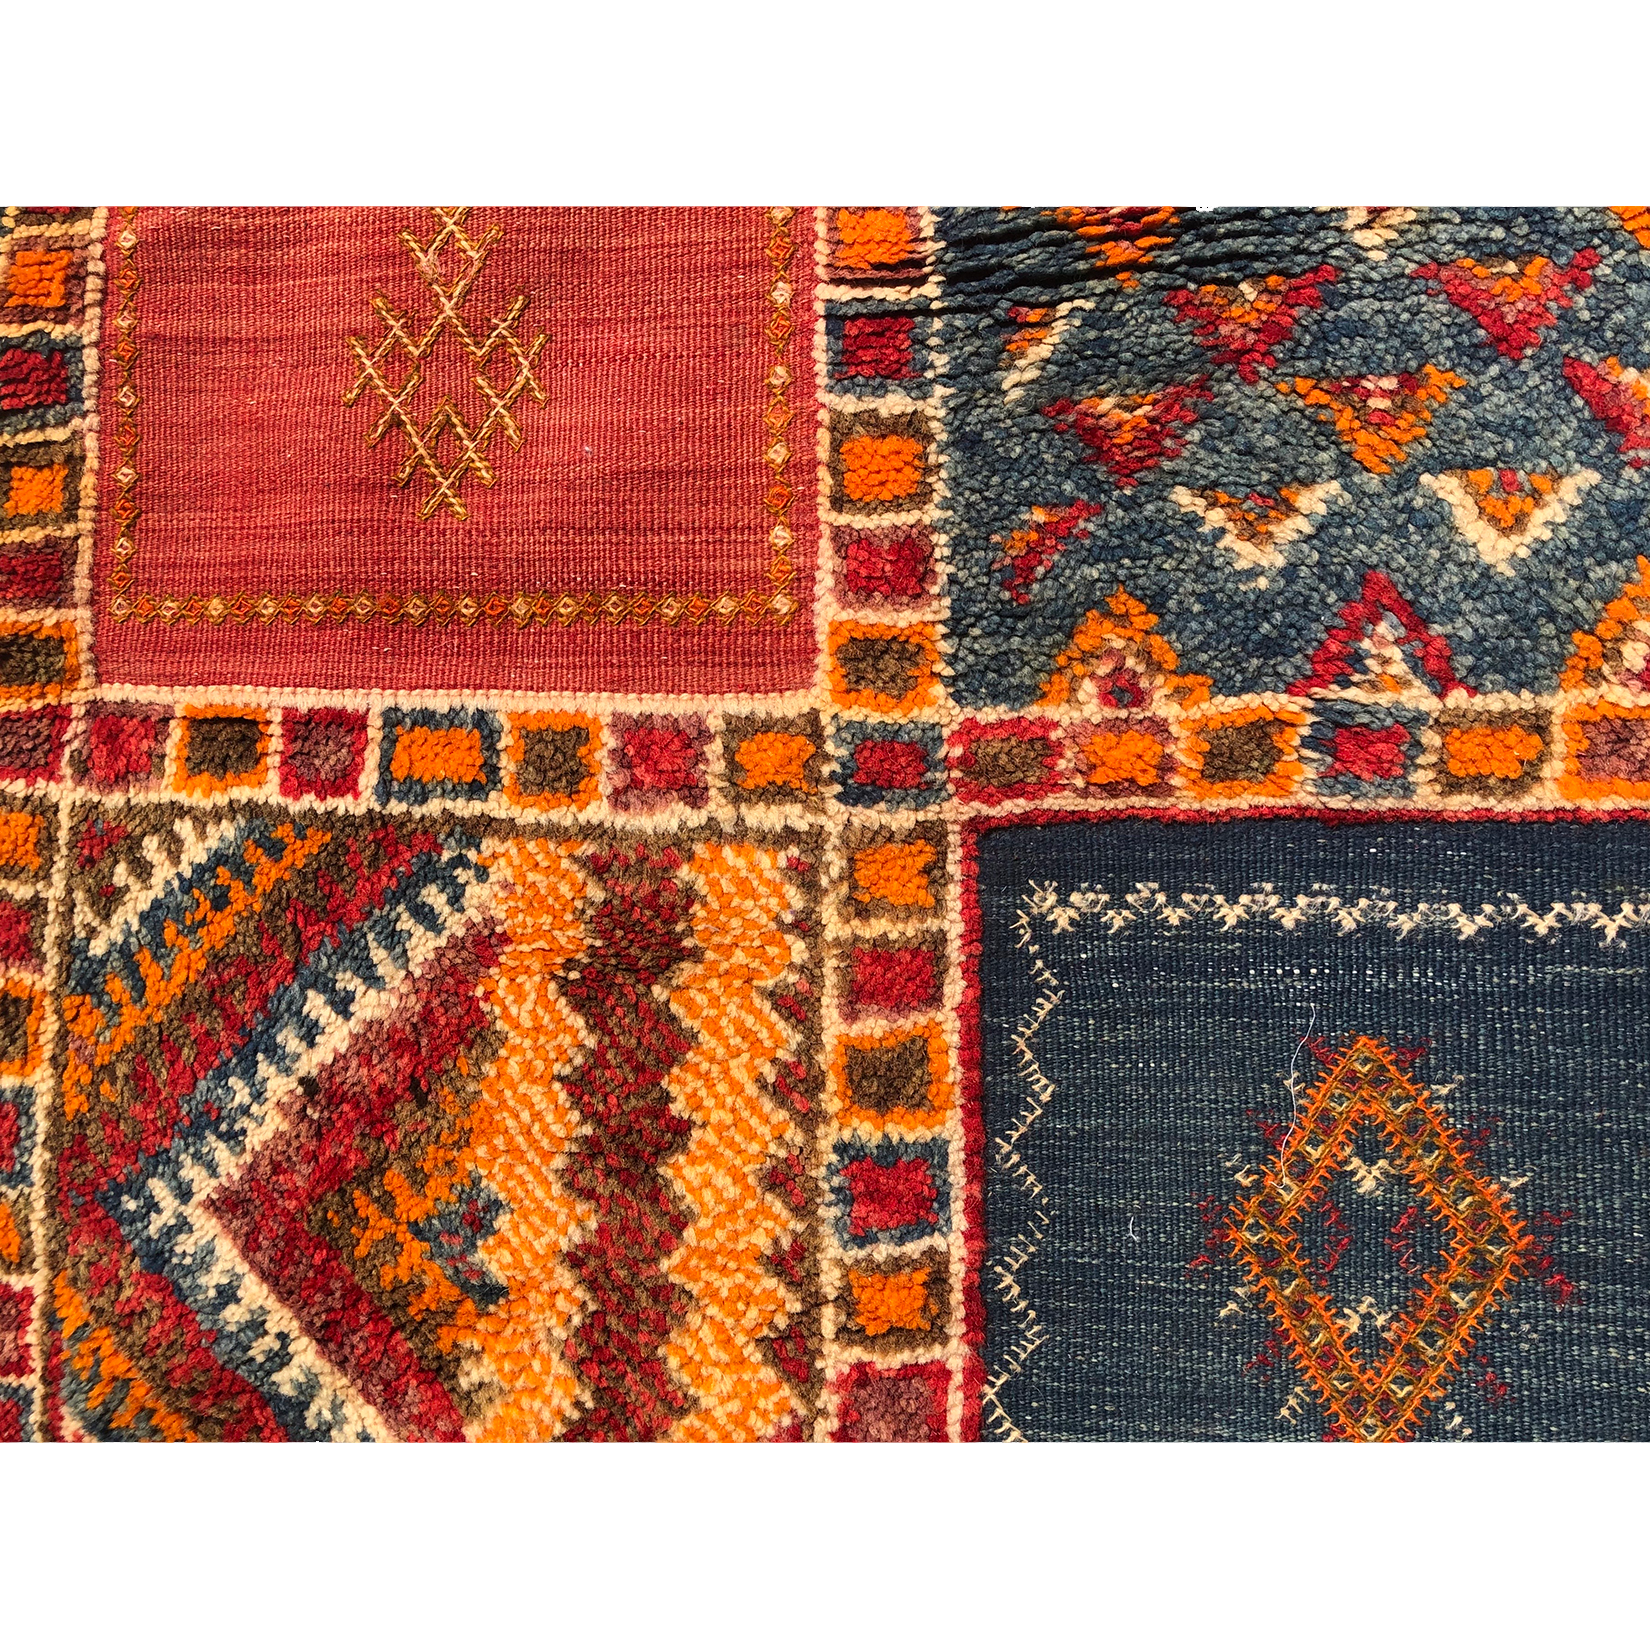 SAMIR - Tilouah colorful Moroccan runner - Kantara | Moroccan Rugs